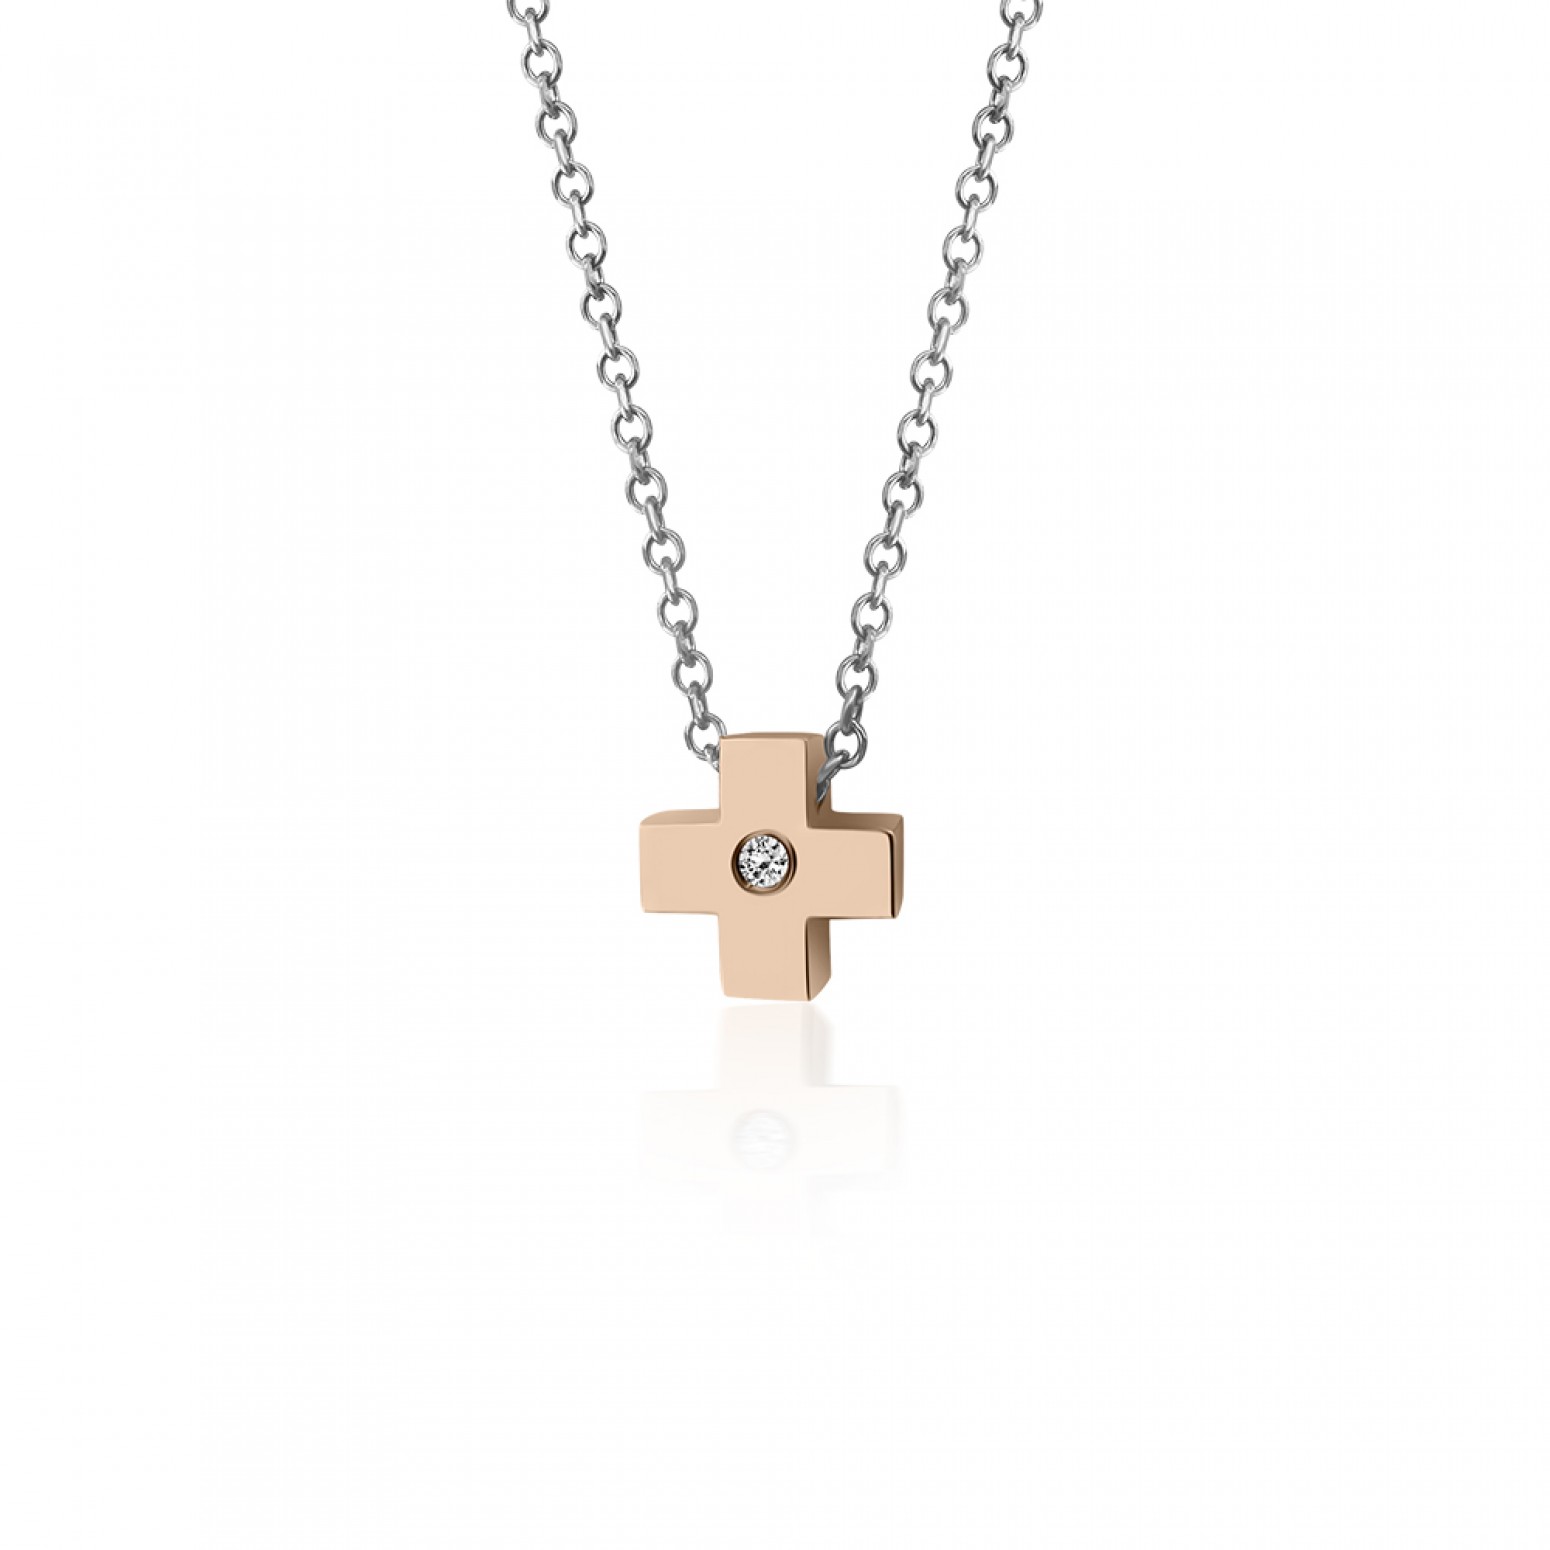 Cross necklace, Κ14 white anf pink gold with zircon, ko5488 NECKLACES Κοσμηματα - chrilia.gr